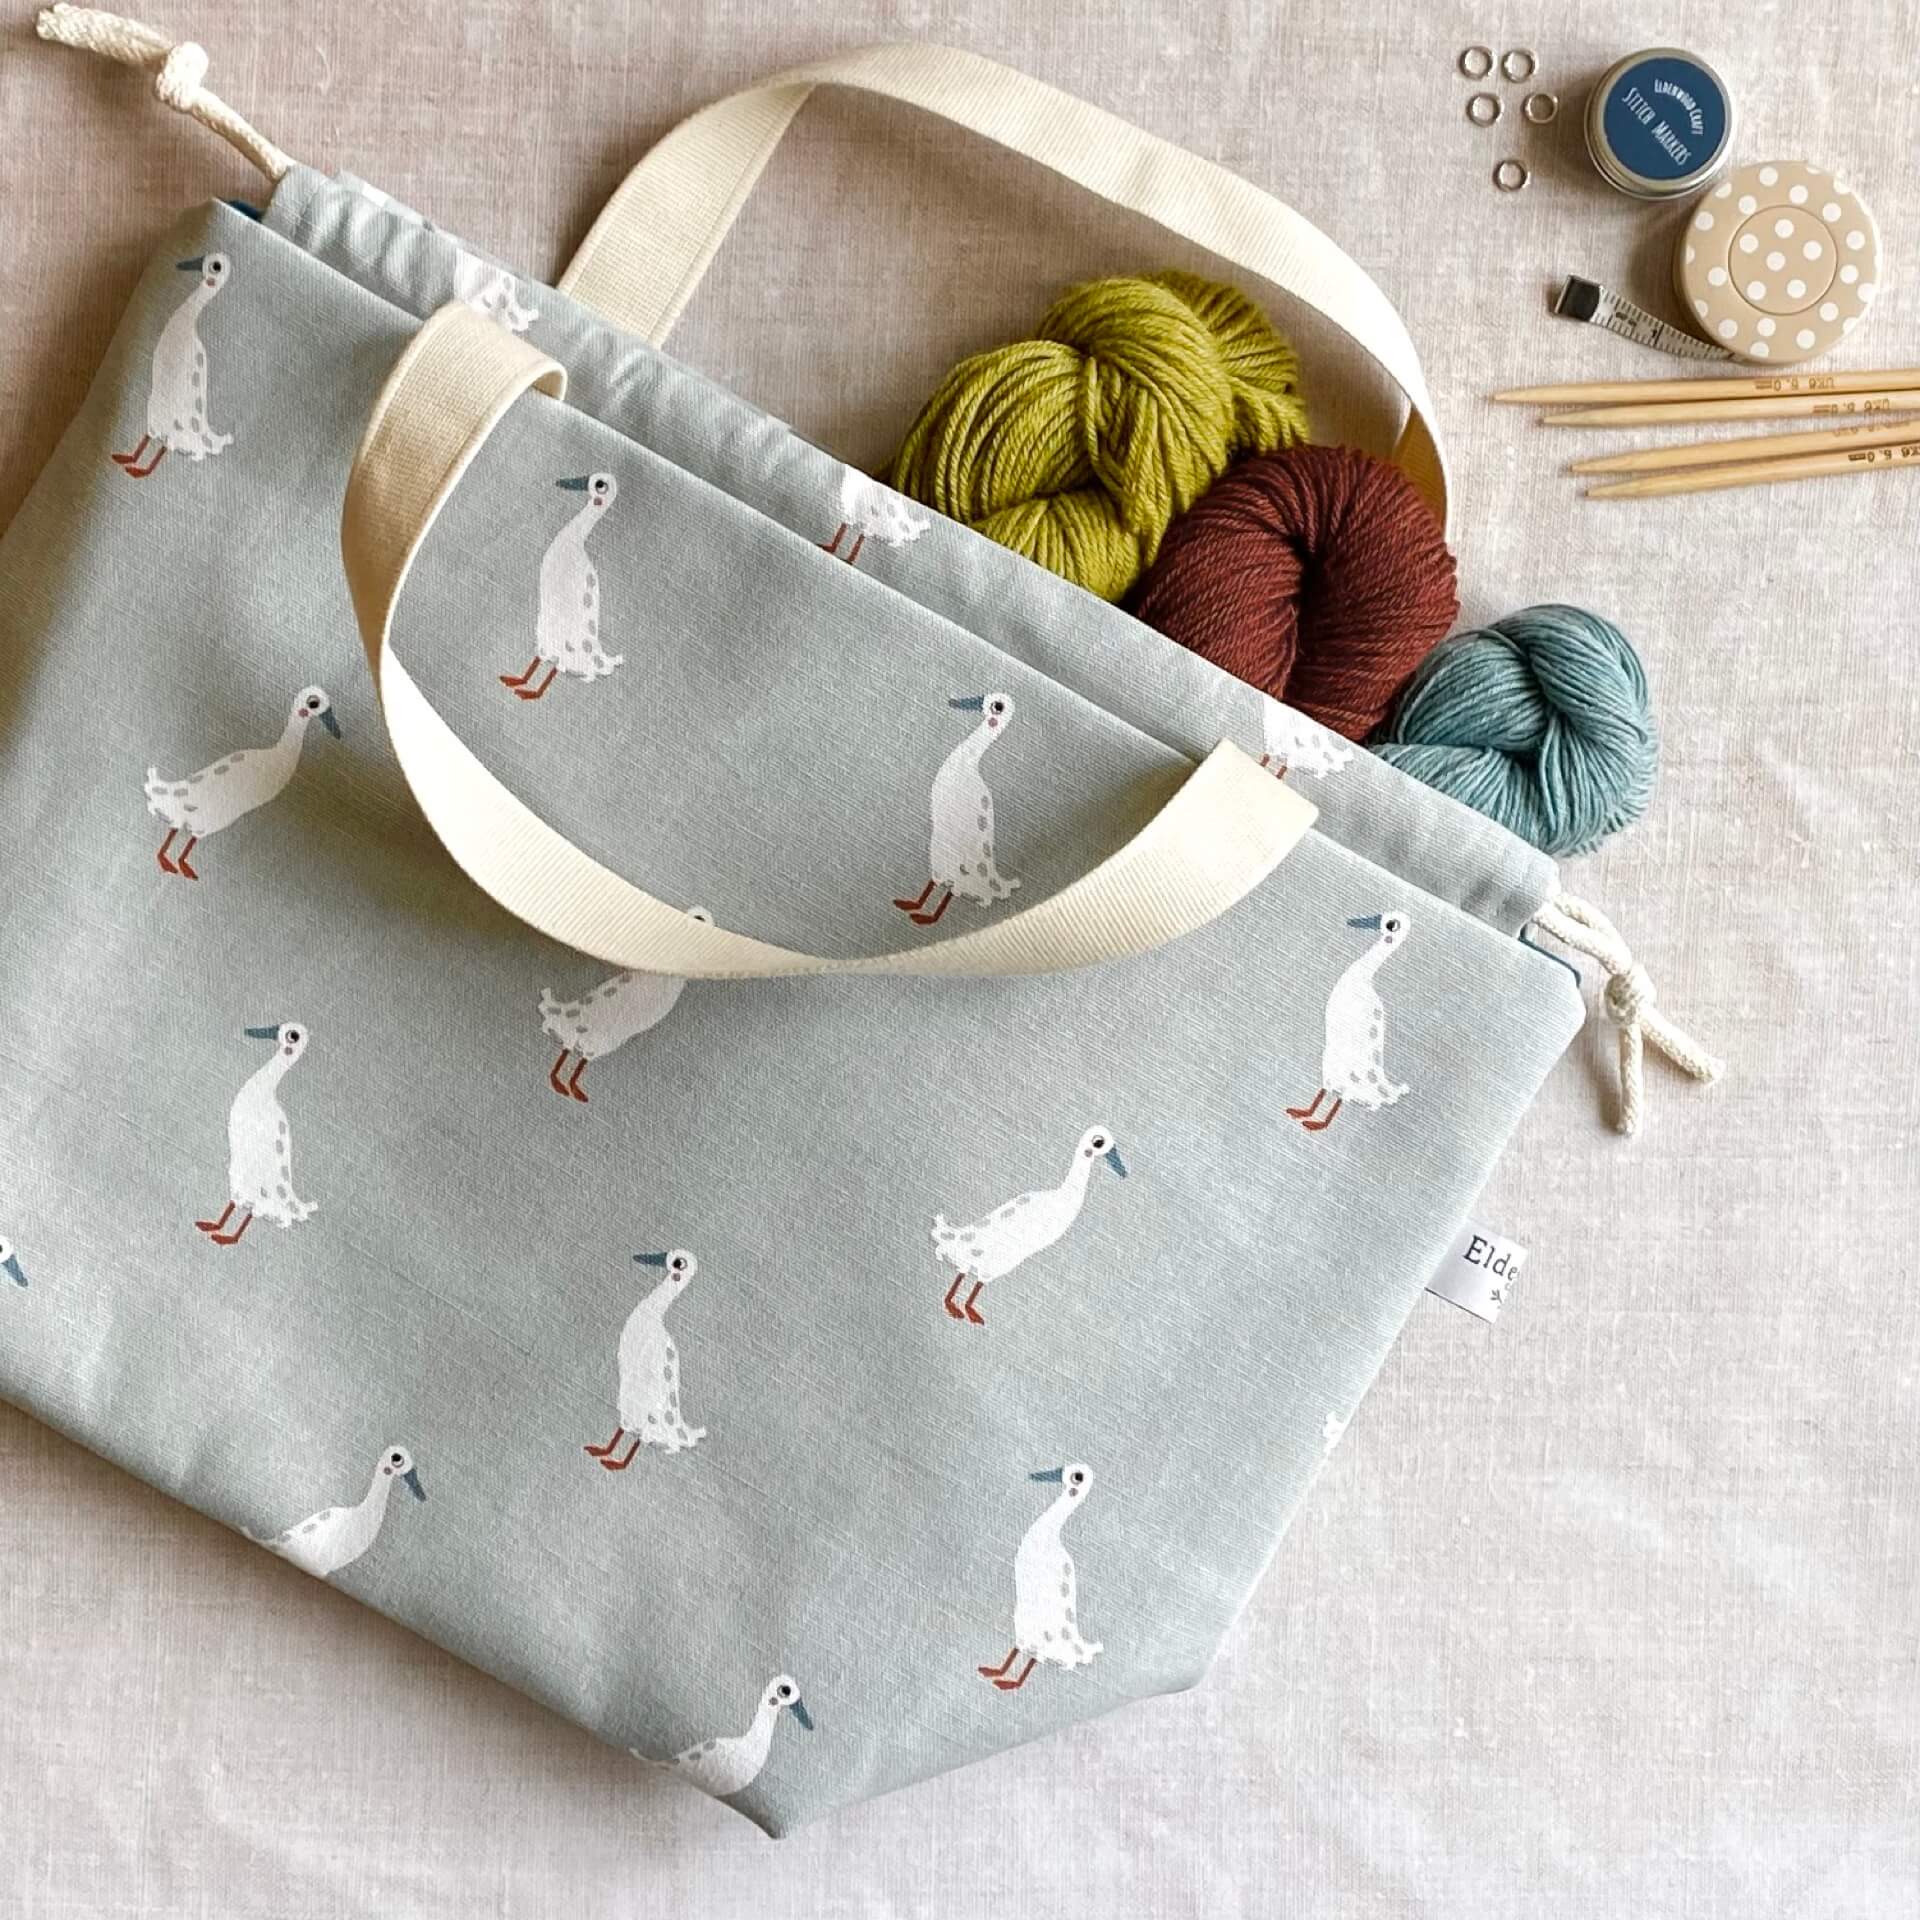 Runner duck knitting project bag handmade by Eldewnwood Craft